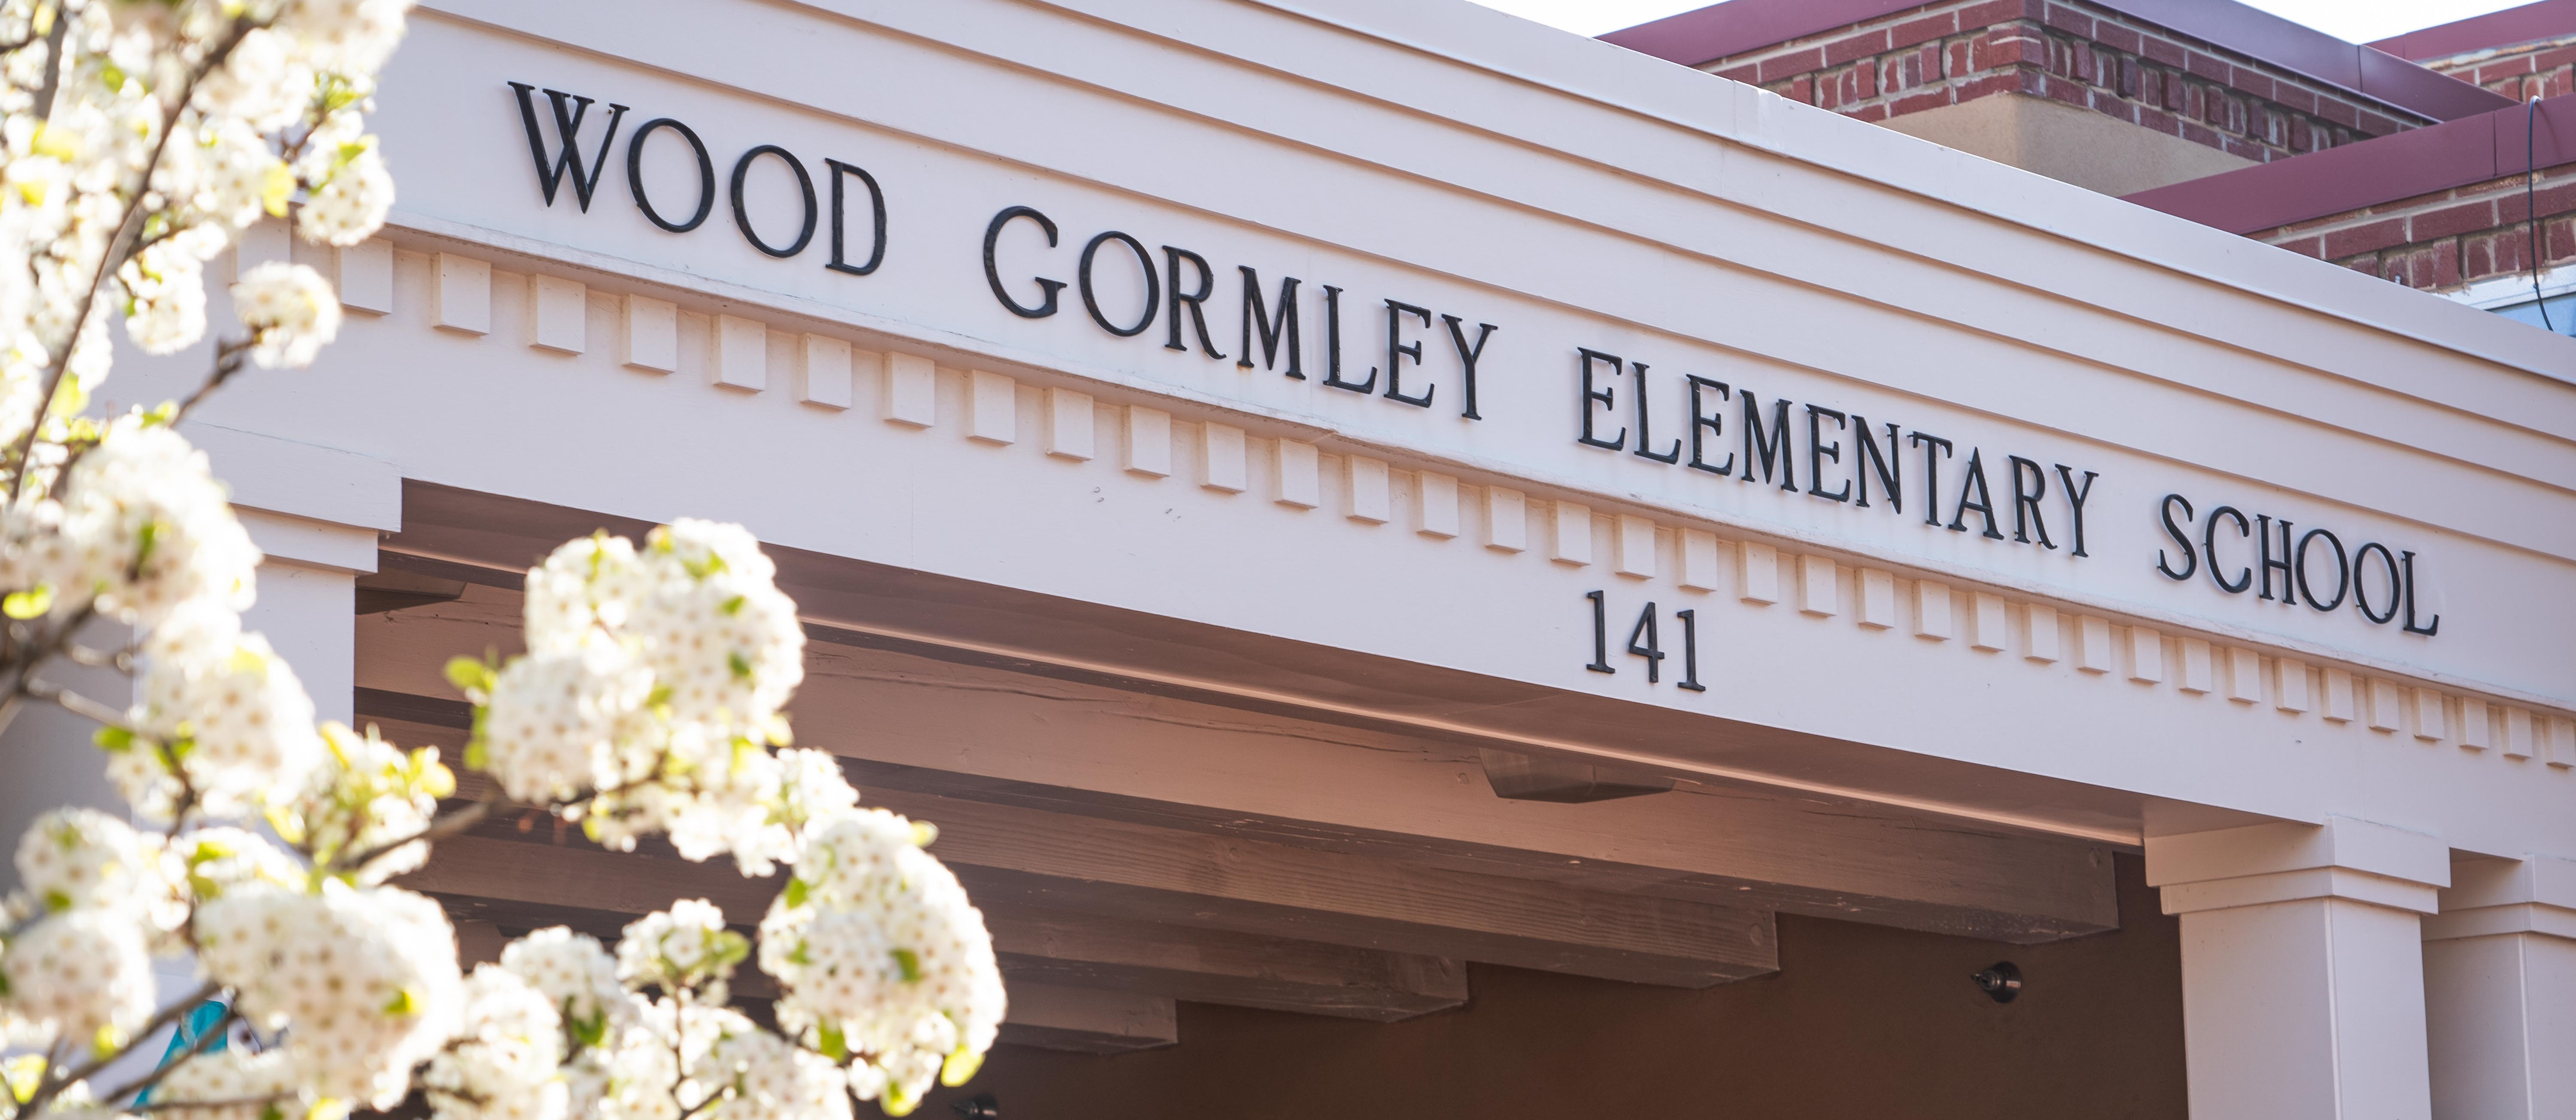 Wood Gormley Elementary